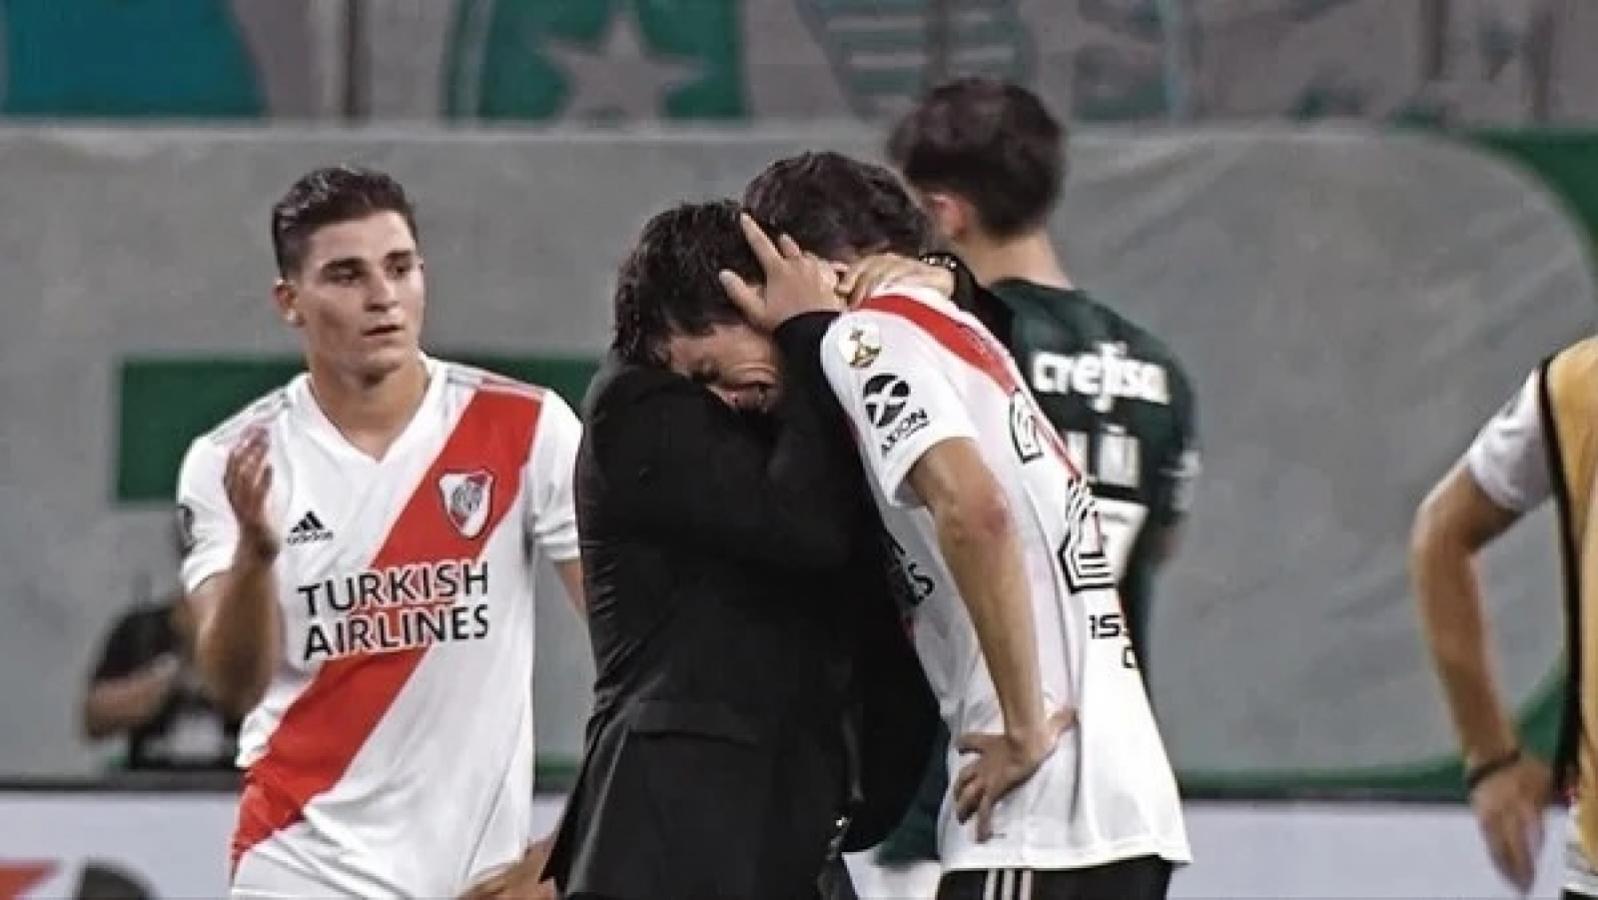 Imagen River sigue extrañando a Nacho Fernández, que hoy brilla en Atlético Mineiro, candidato a quedarse con la Copa Libertadores.